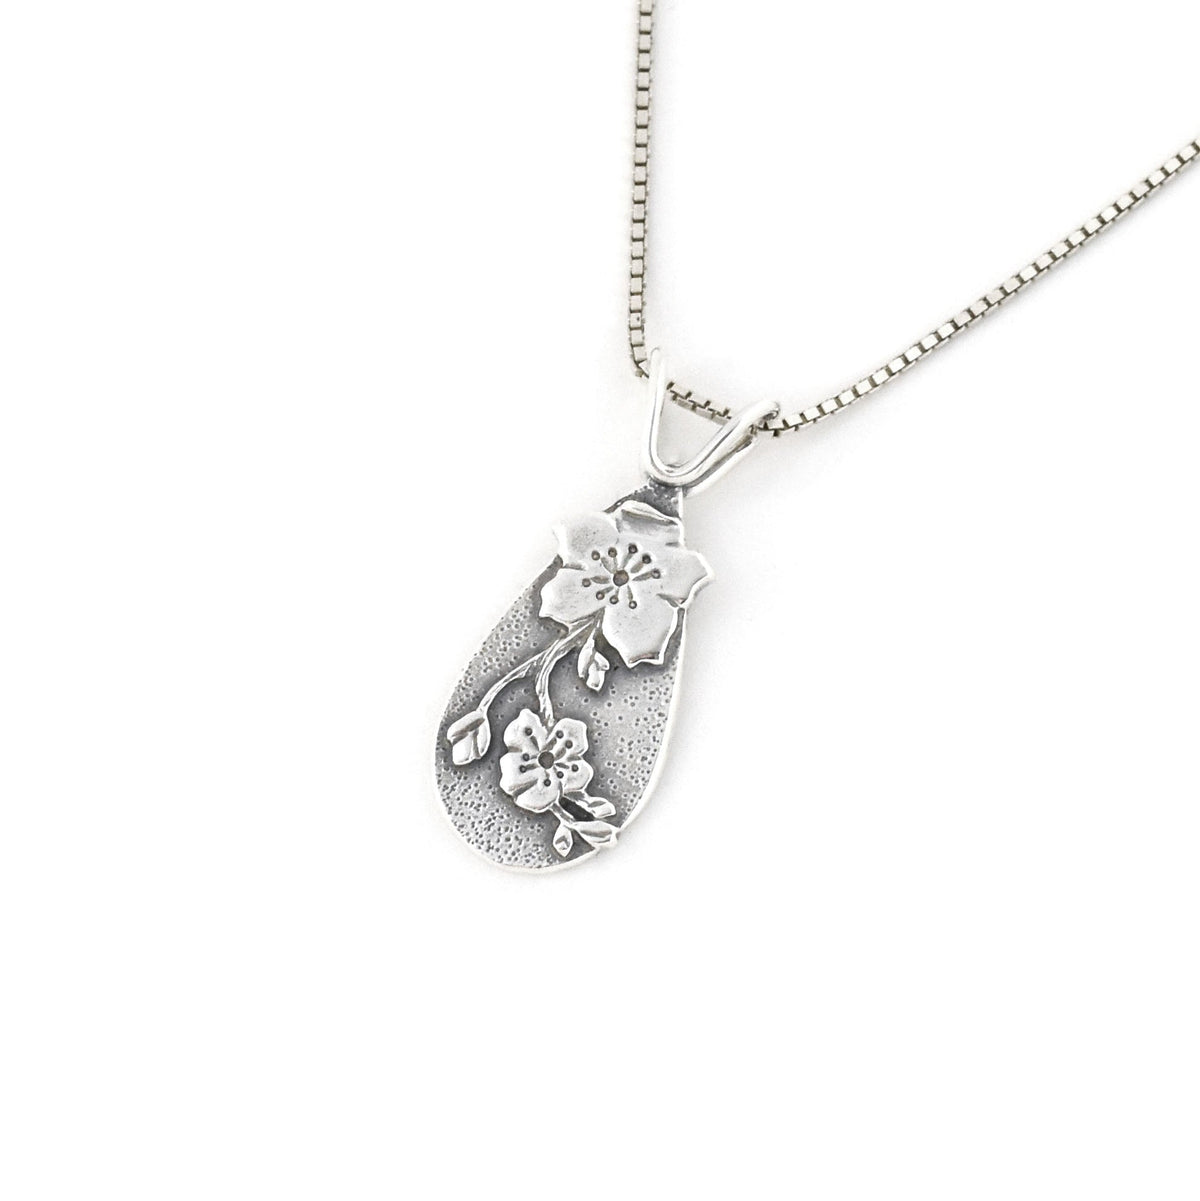 Small Apple Blossom Pendant - Silver Pendant   5774 - handmade by Beth Millner Jewelry